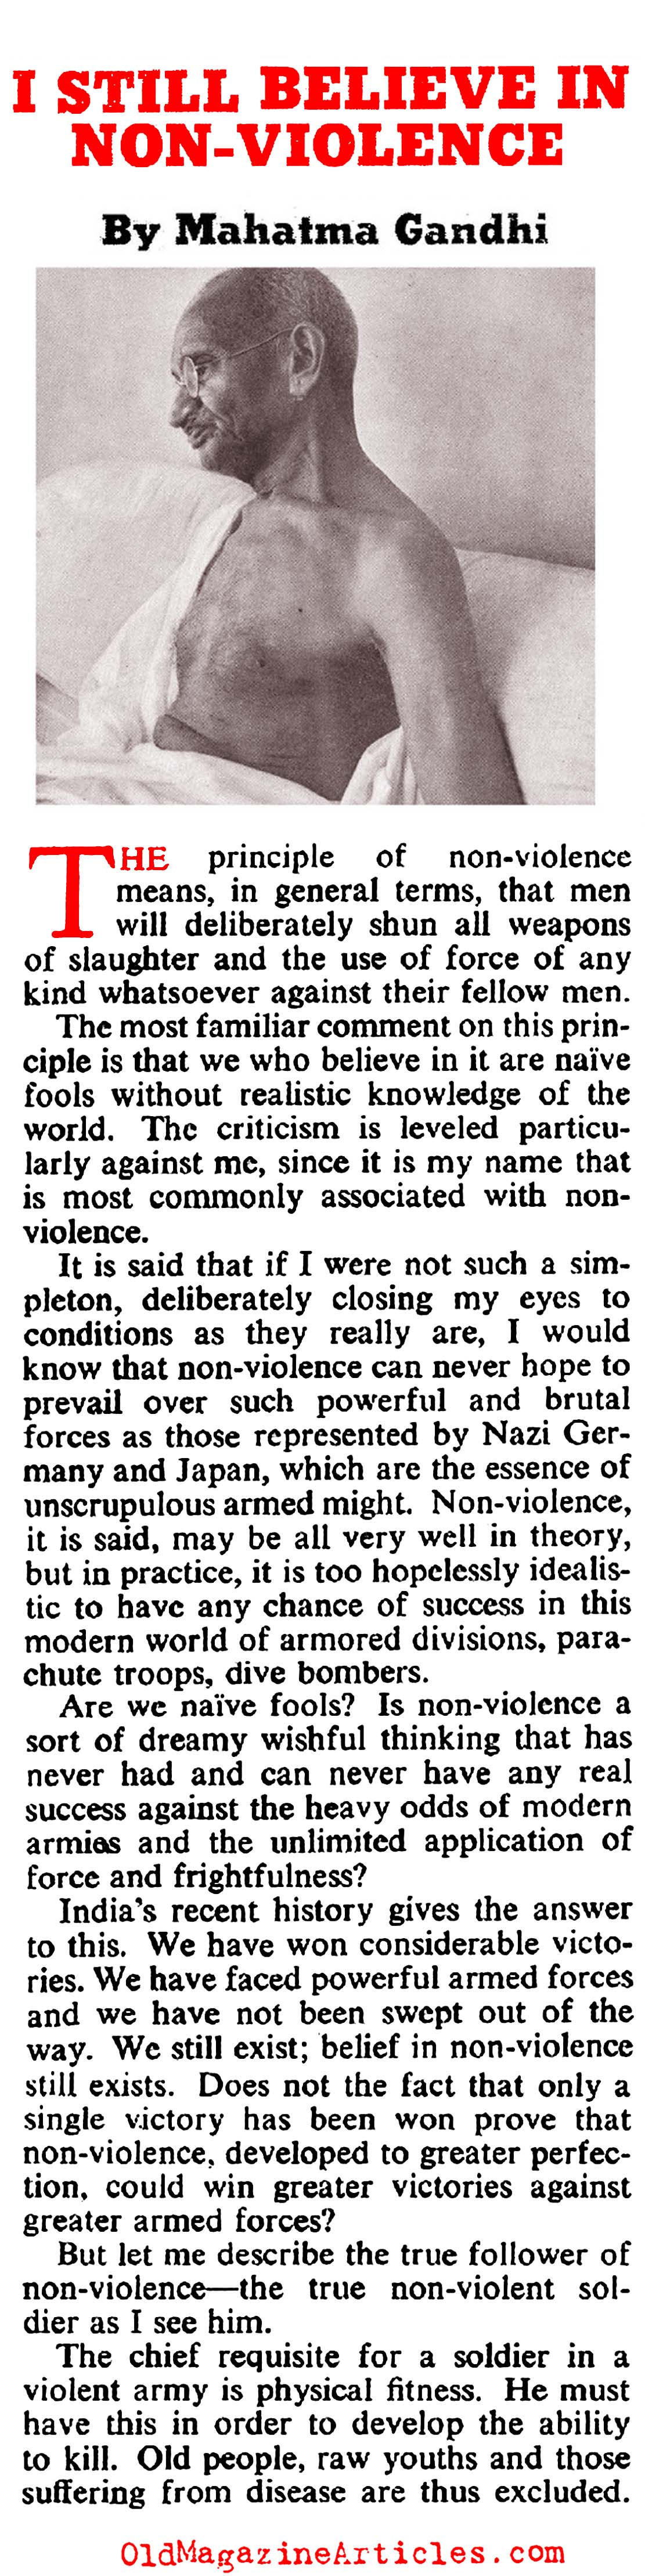 'I Still Believe in Non-Violence' by Mahatma Gandhi (Collier's Magazine, 1943)